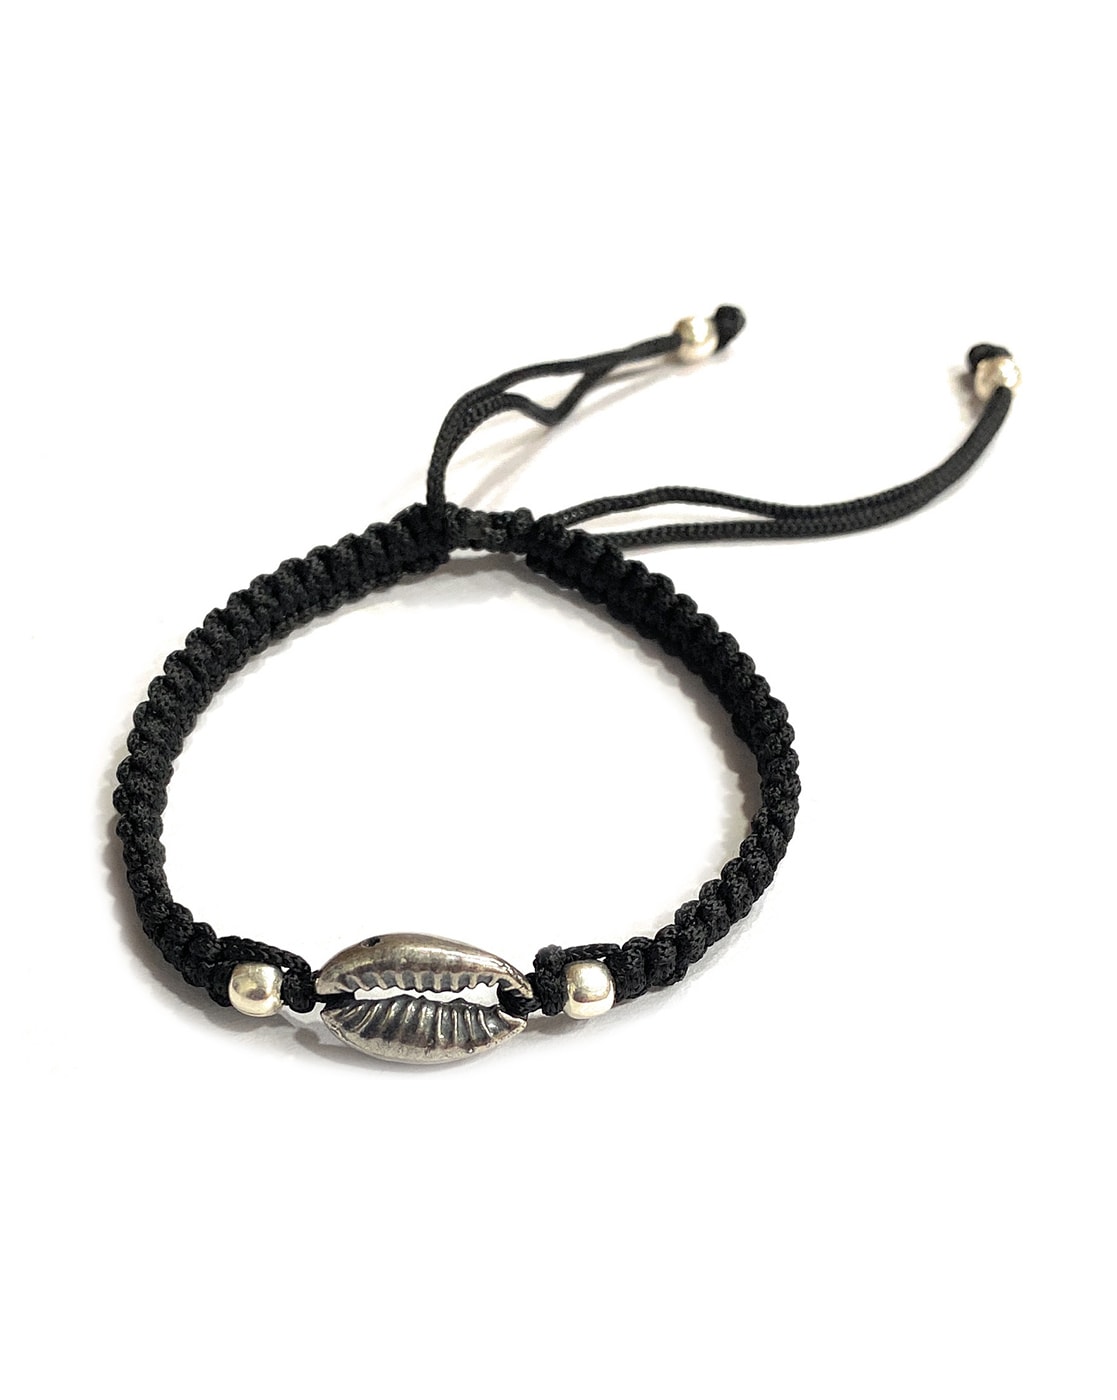 Talisman protection hindu mauli dangling bells kaudi conch shankh lucky  bracelet | eBay